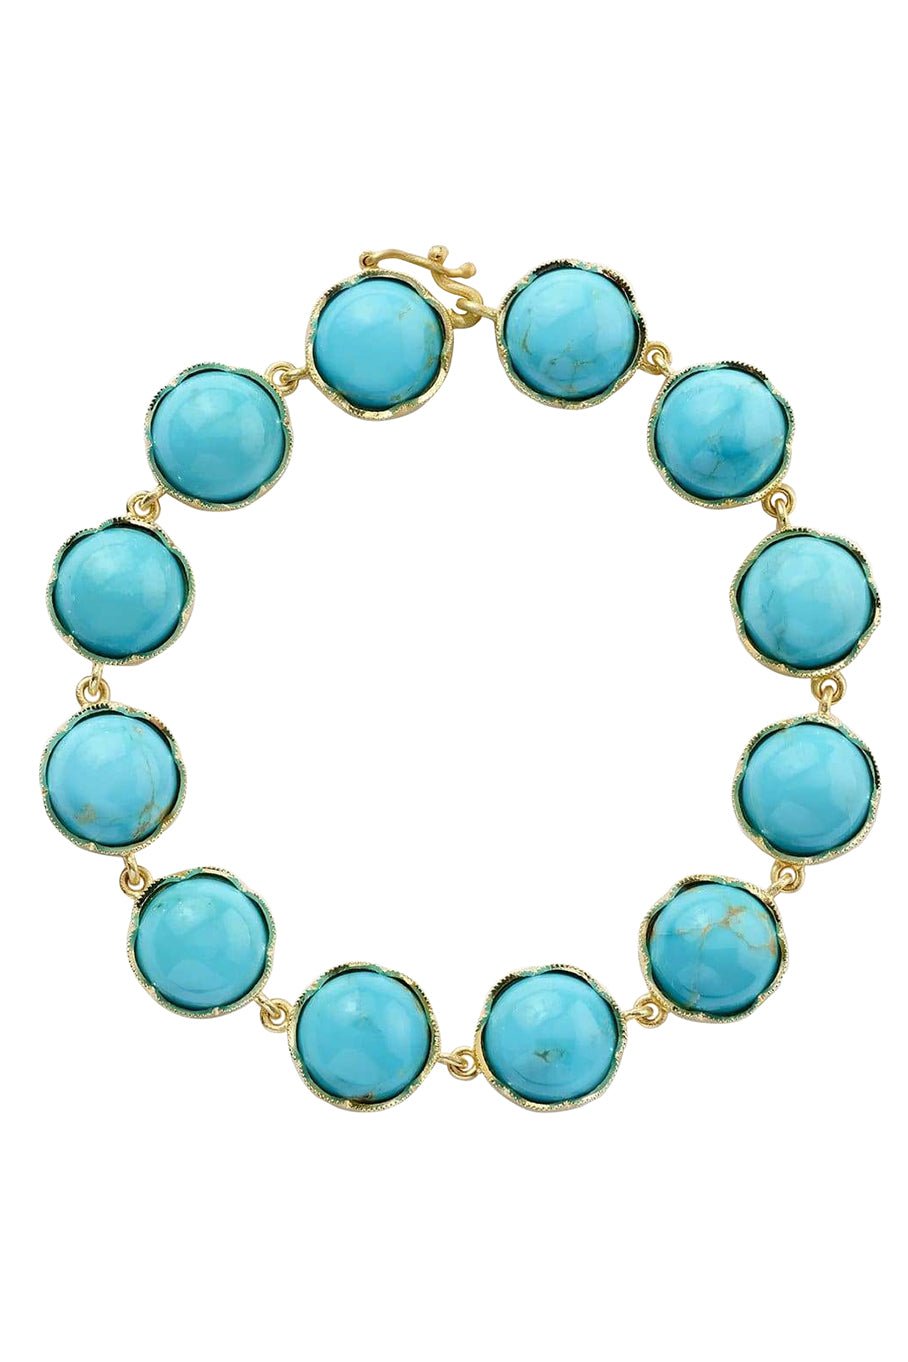 IRENE NEUWIRTH JEWELRY-Turquoise Medium Classic Link Bracelet-YELLOW GOLD